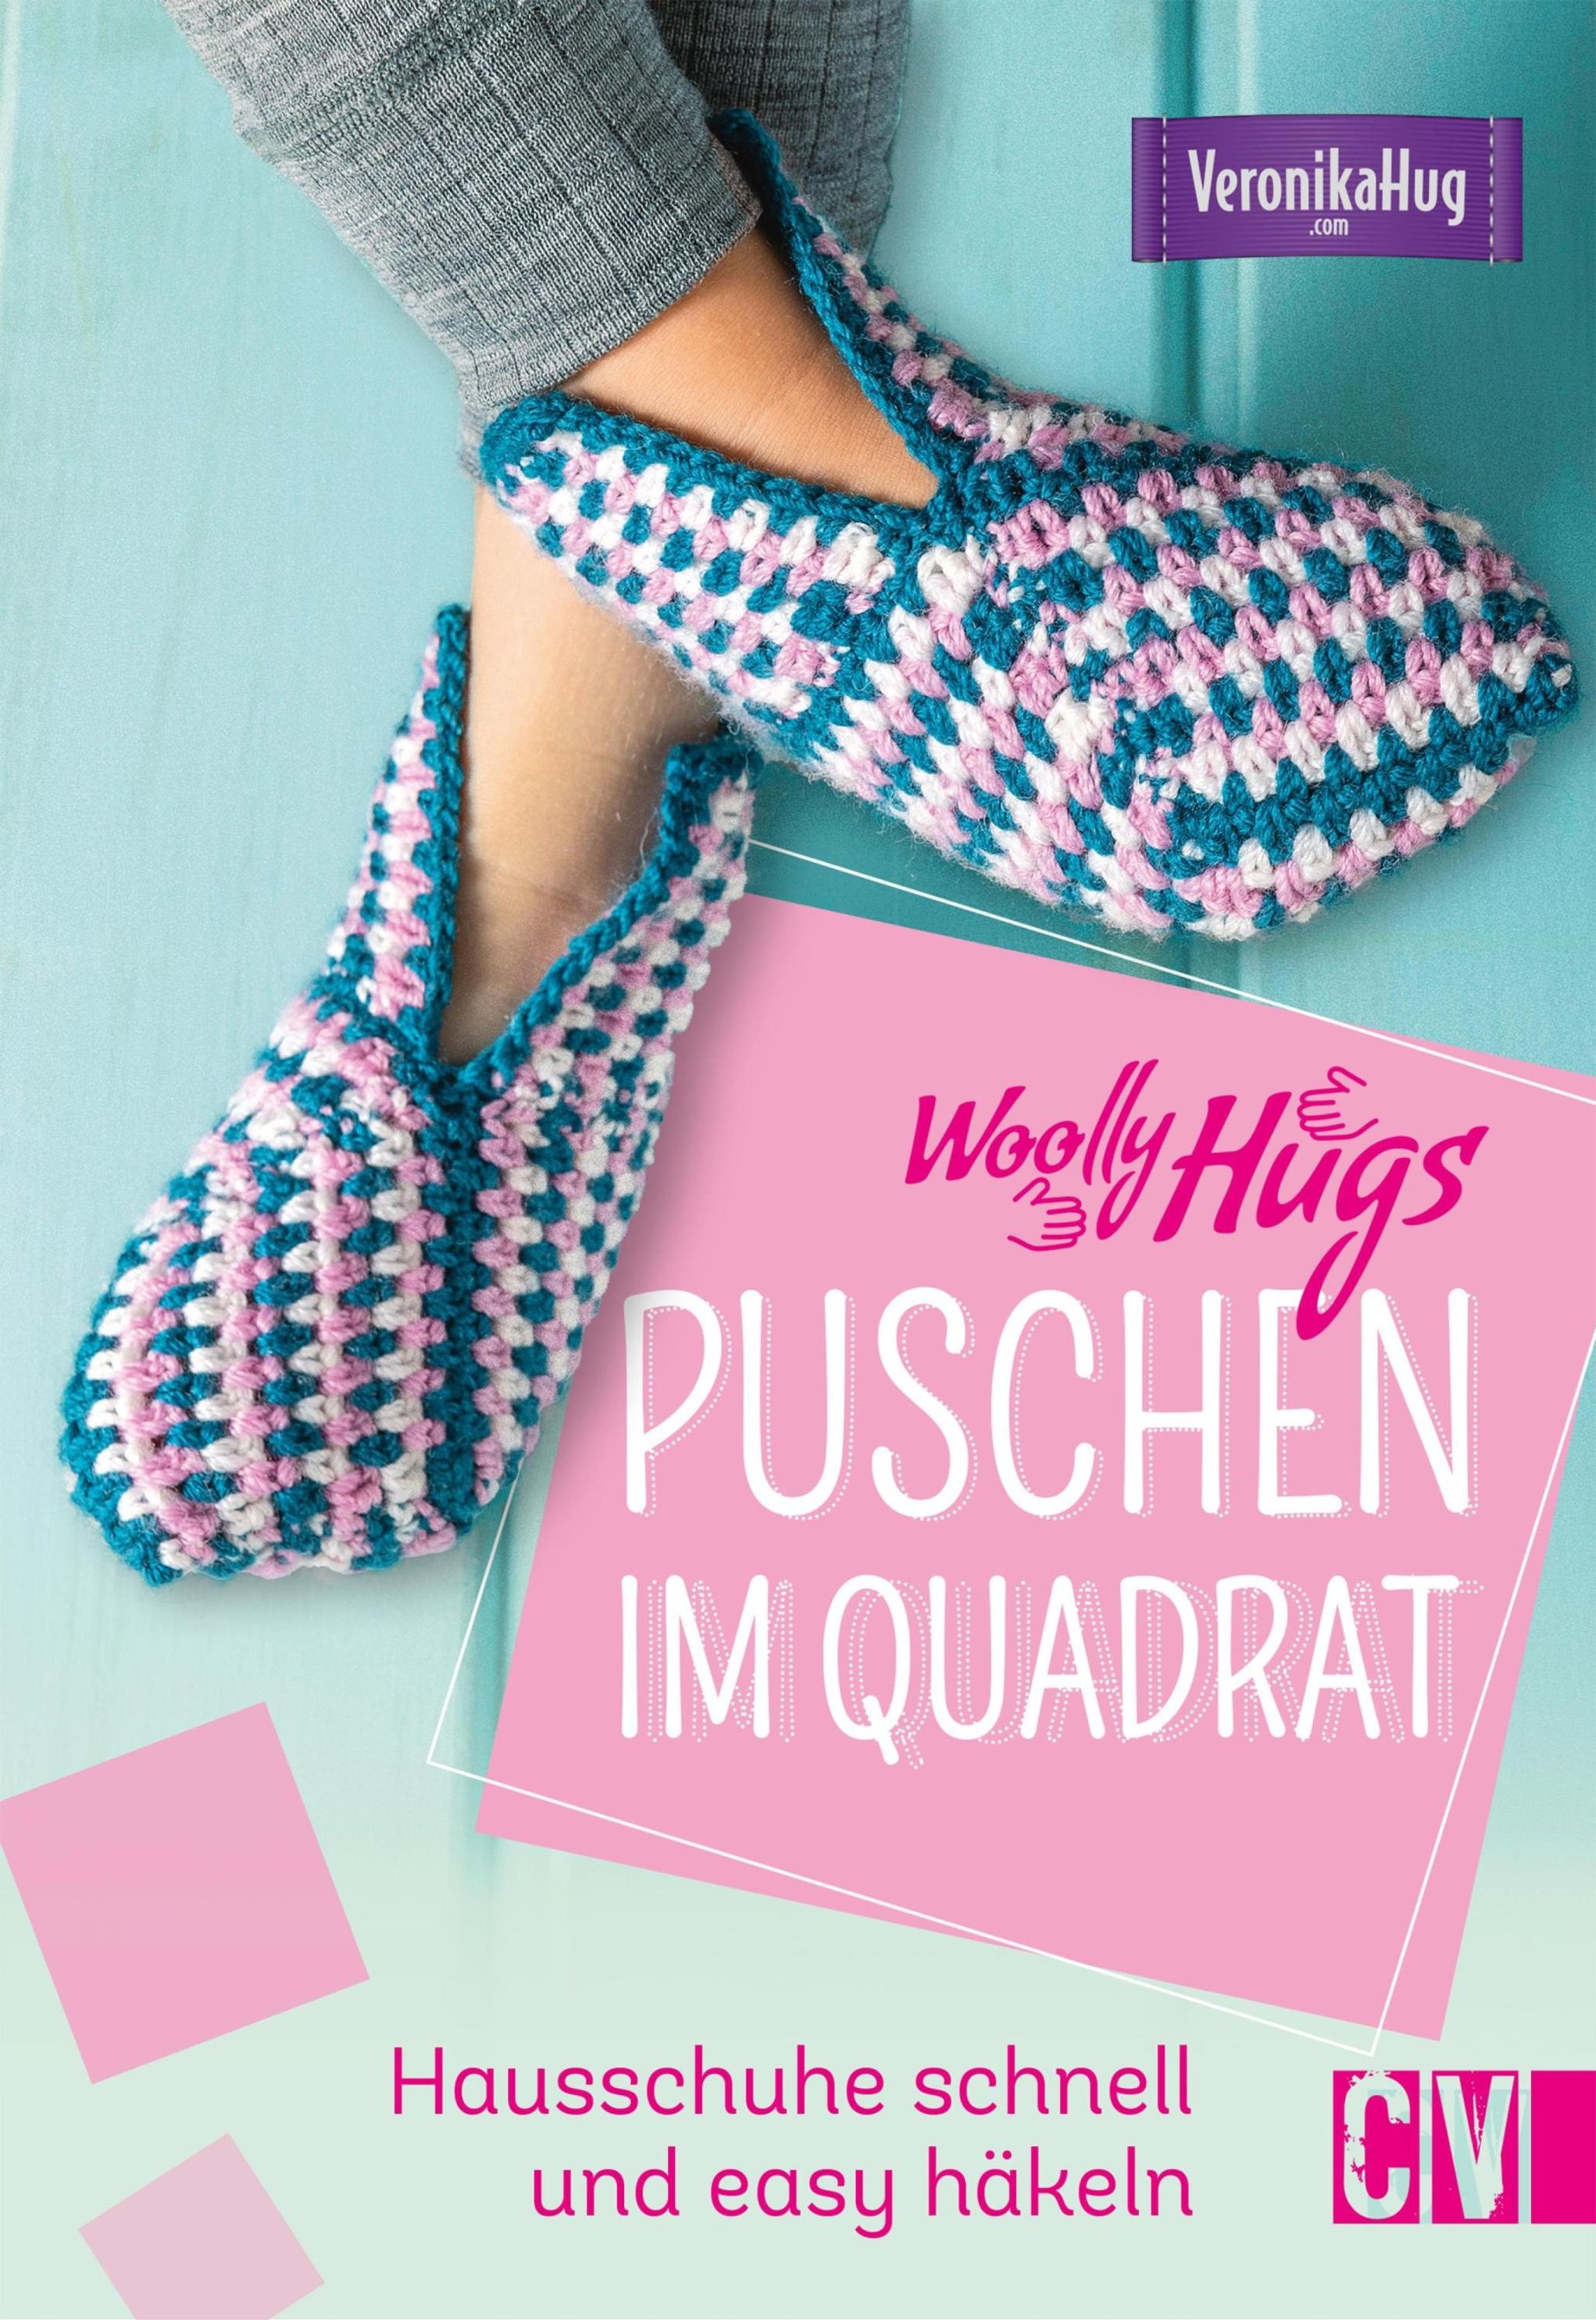 Woolly Hugs Puschen häkeln im Quadrat eBook v. Veronika Hug | Weltbild